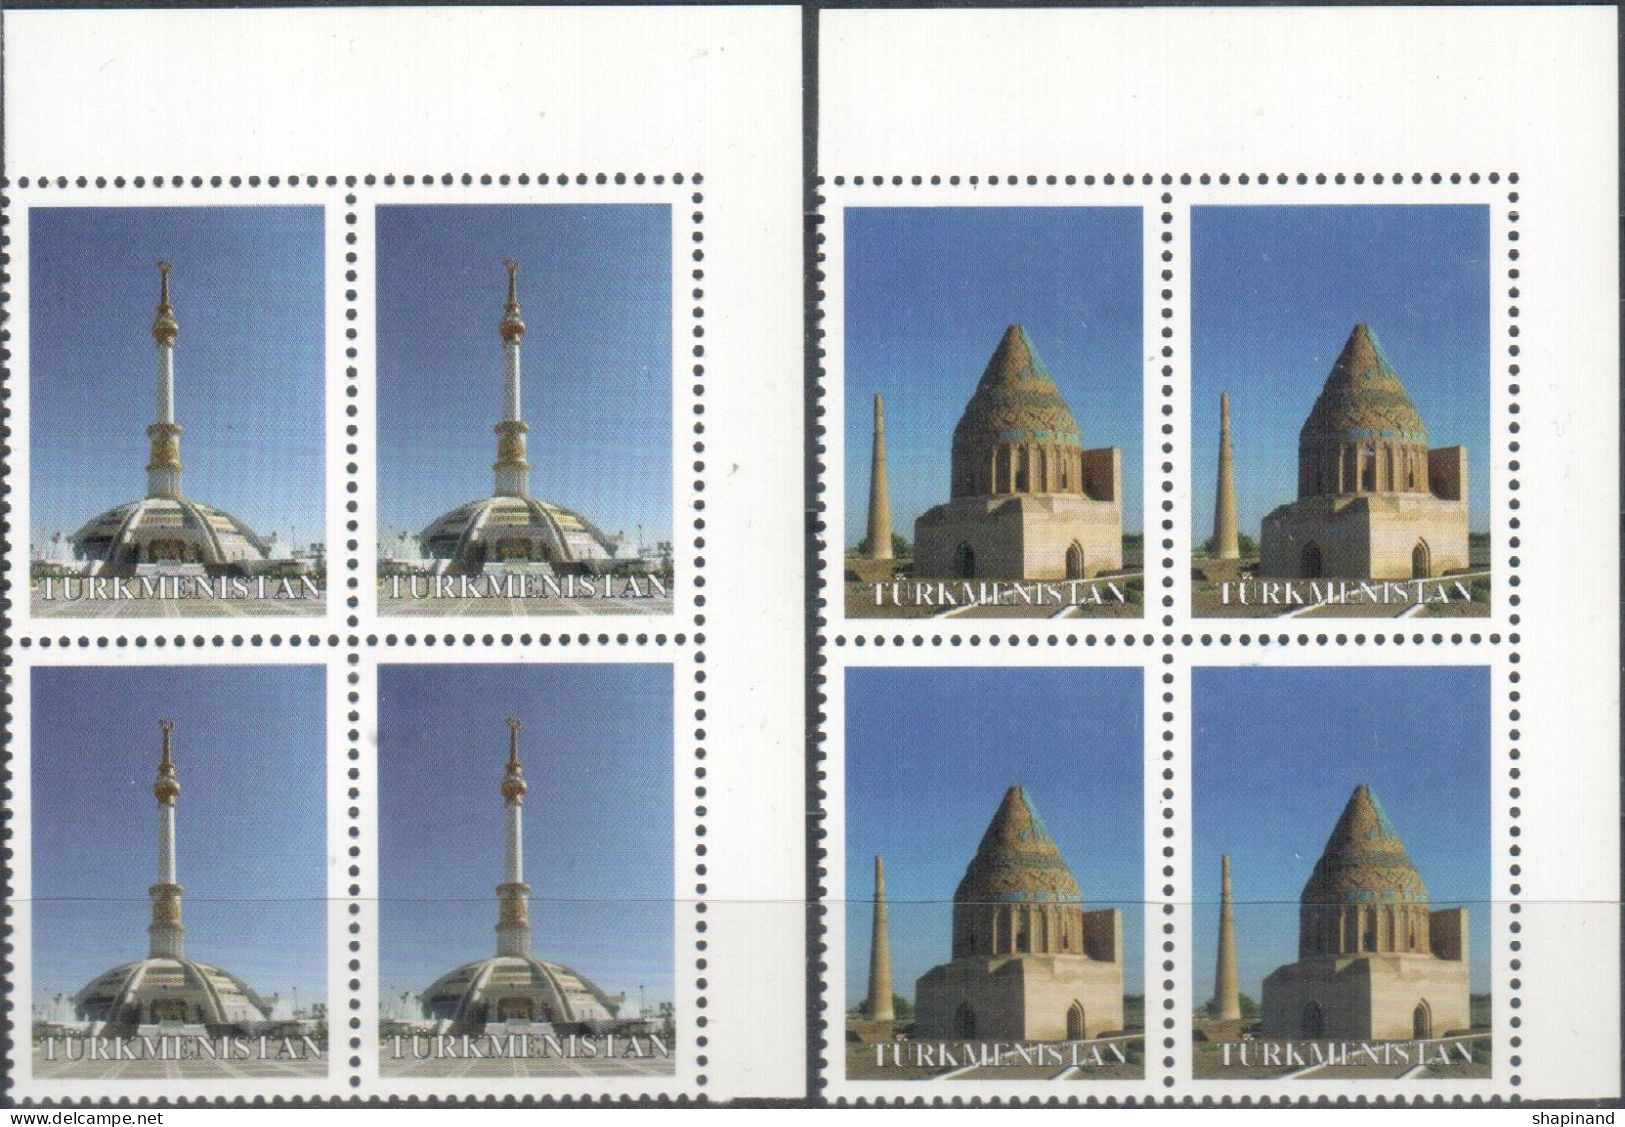 Turkmenistan 2014 "Architecture Of Ashgabat" (A Very Rare Stamps Without A Face Value) 2 Bl Of 4v Quality100% - Turkmenistán